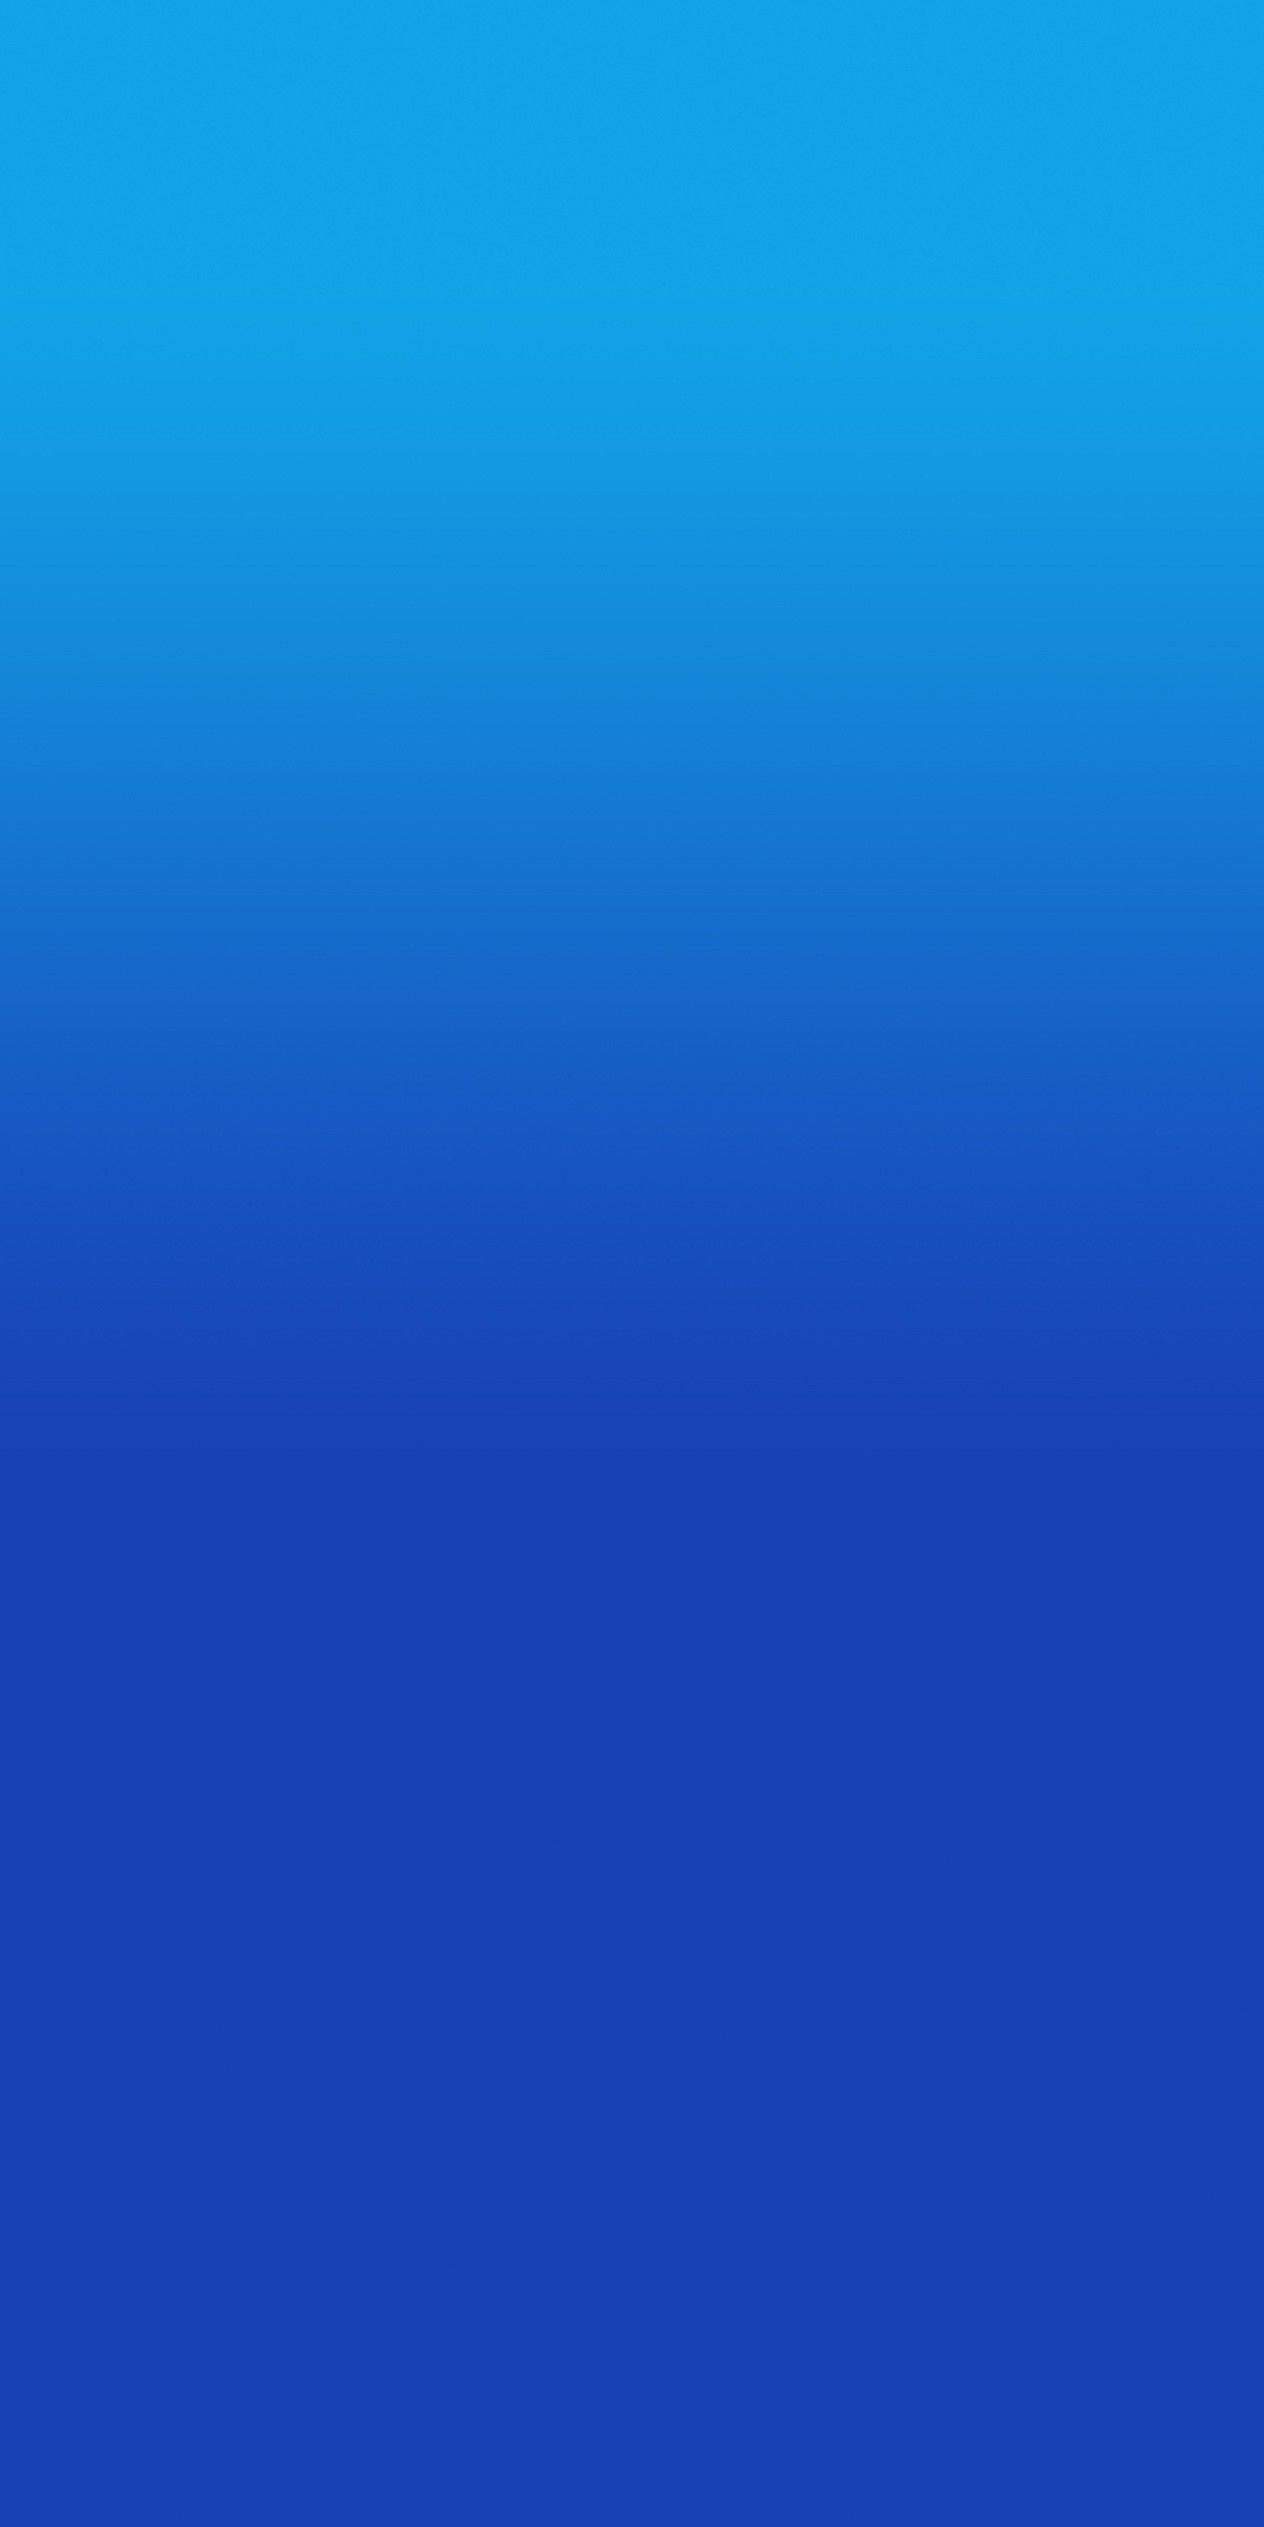 Asus Zenfone Max Pro M1 Stock Wallpaper 2 Blue